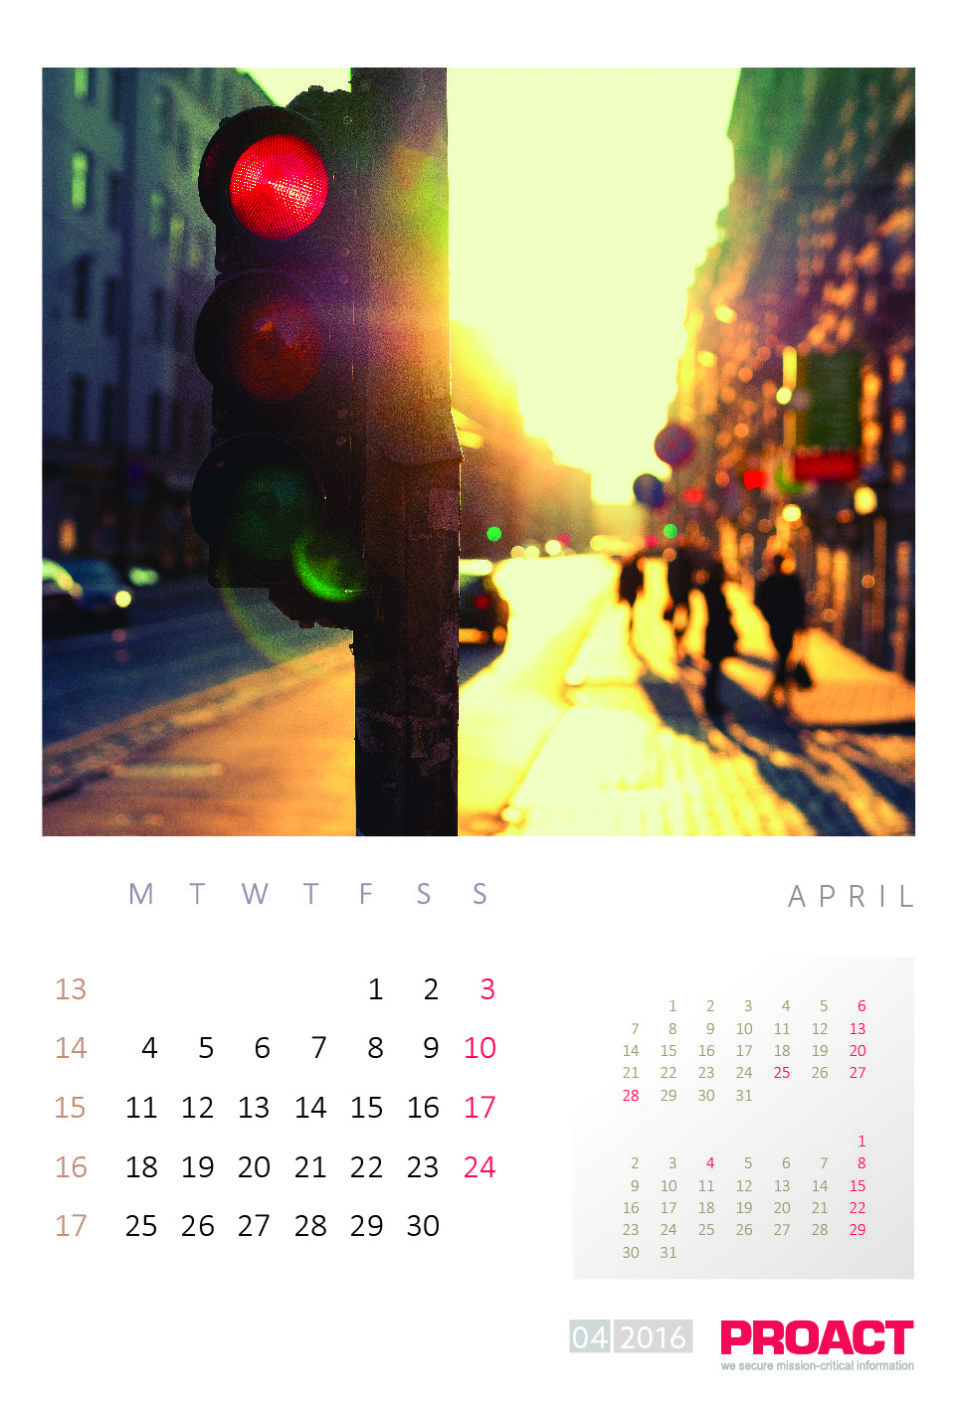 The calendar. Proact